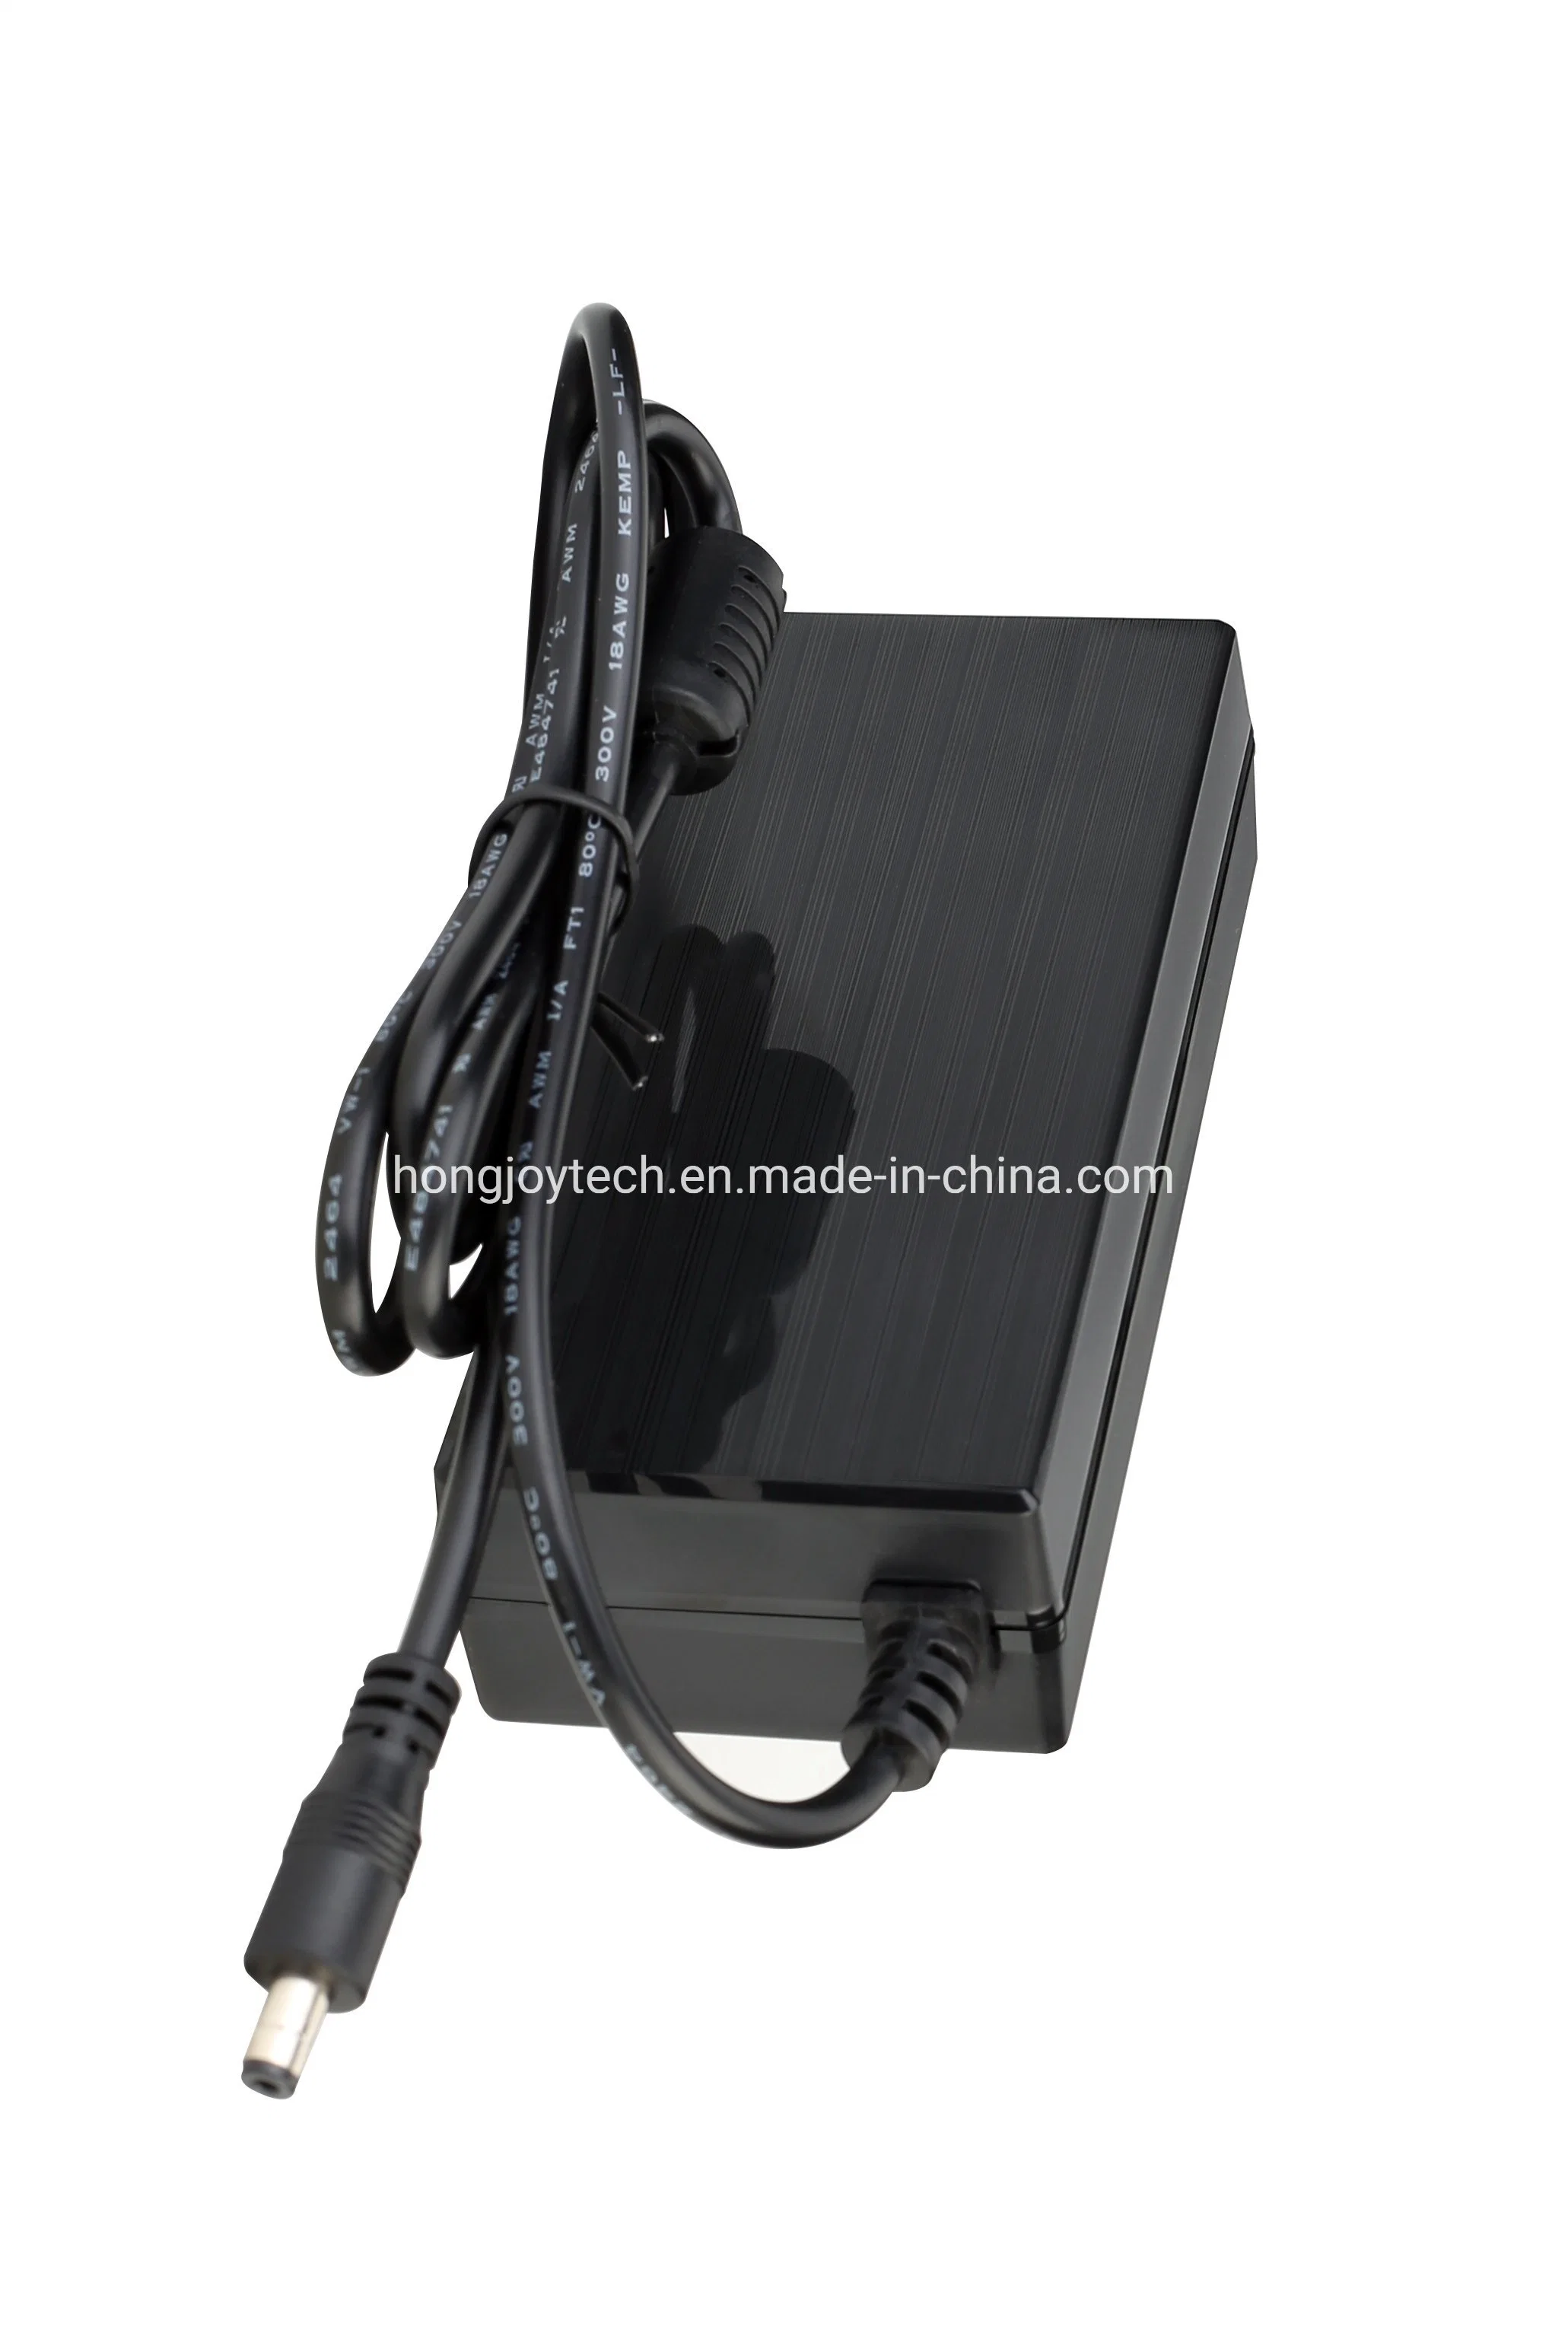 Us UK EU Ar Aus Power Plugs International Cert. FCC TUV GS SAA Kc C13 C14 Power Inlet Switching Power Supply Units 19V 9.47A Desktop Lithium-Ion Battery Charger